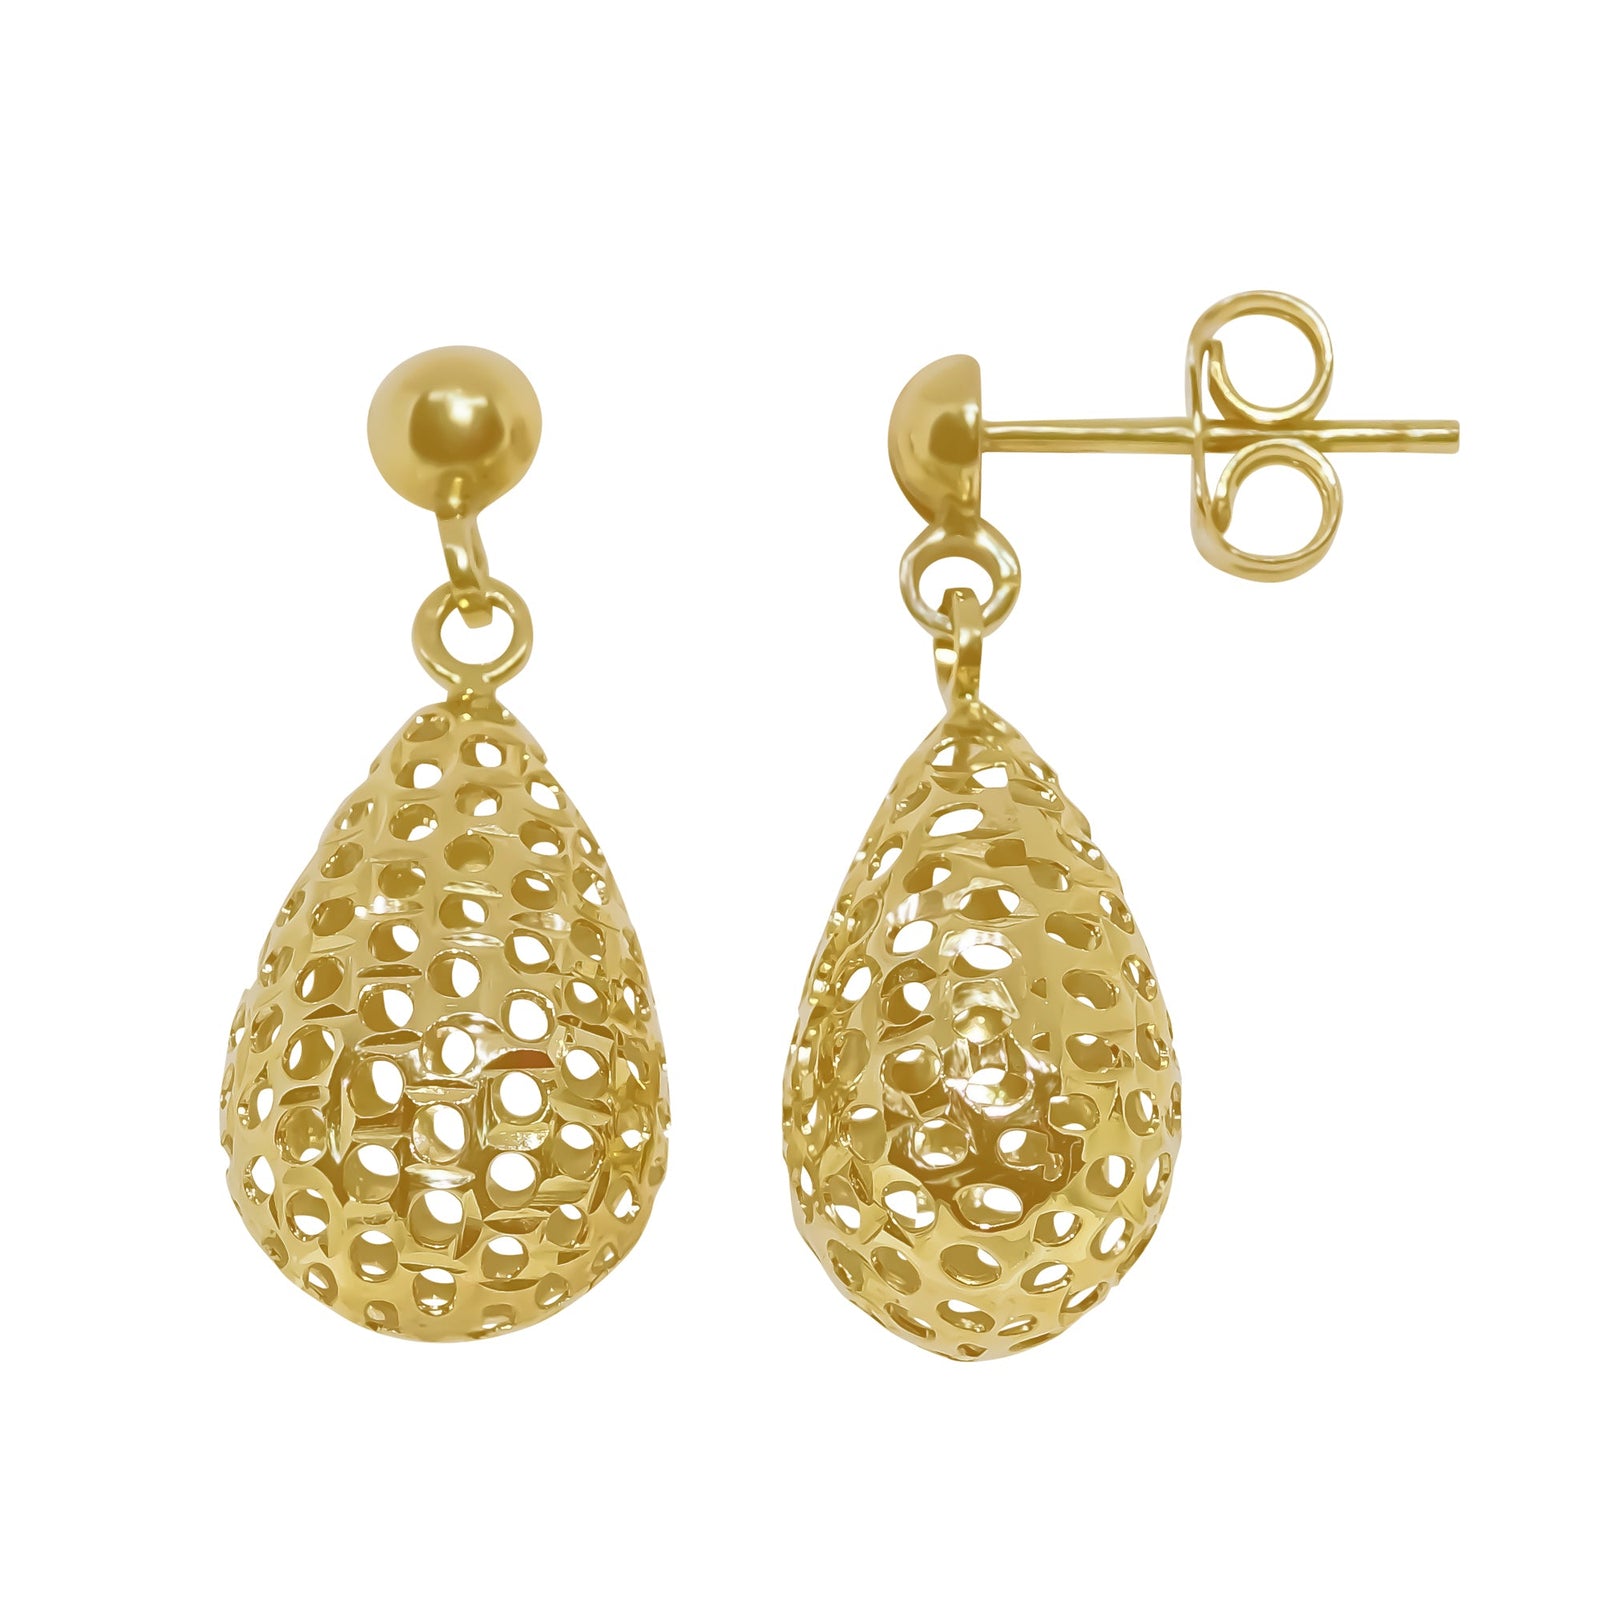 9ct gold filigree drop earrings